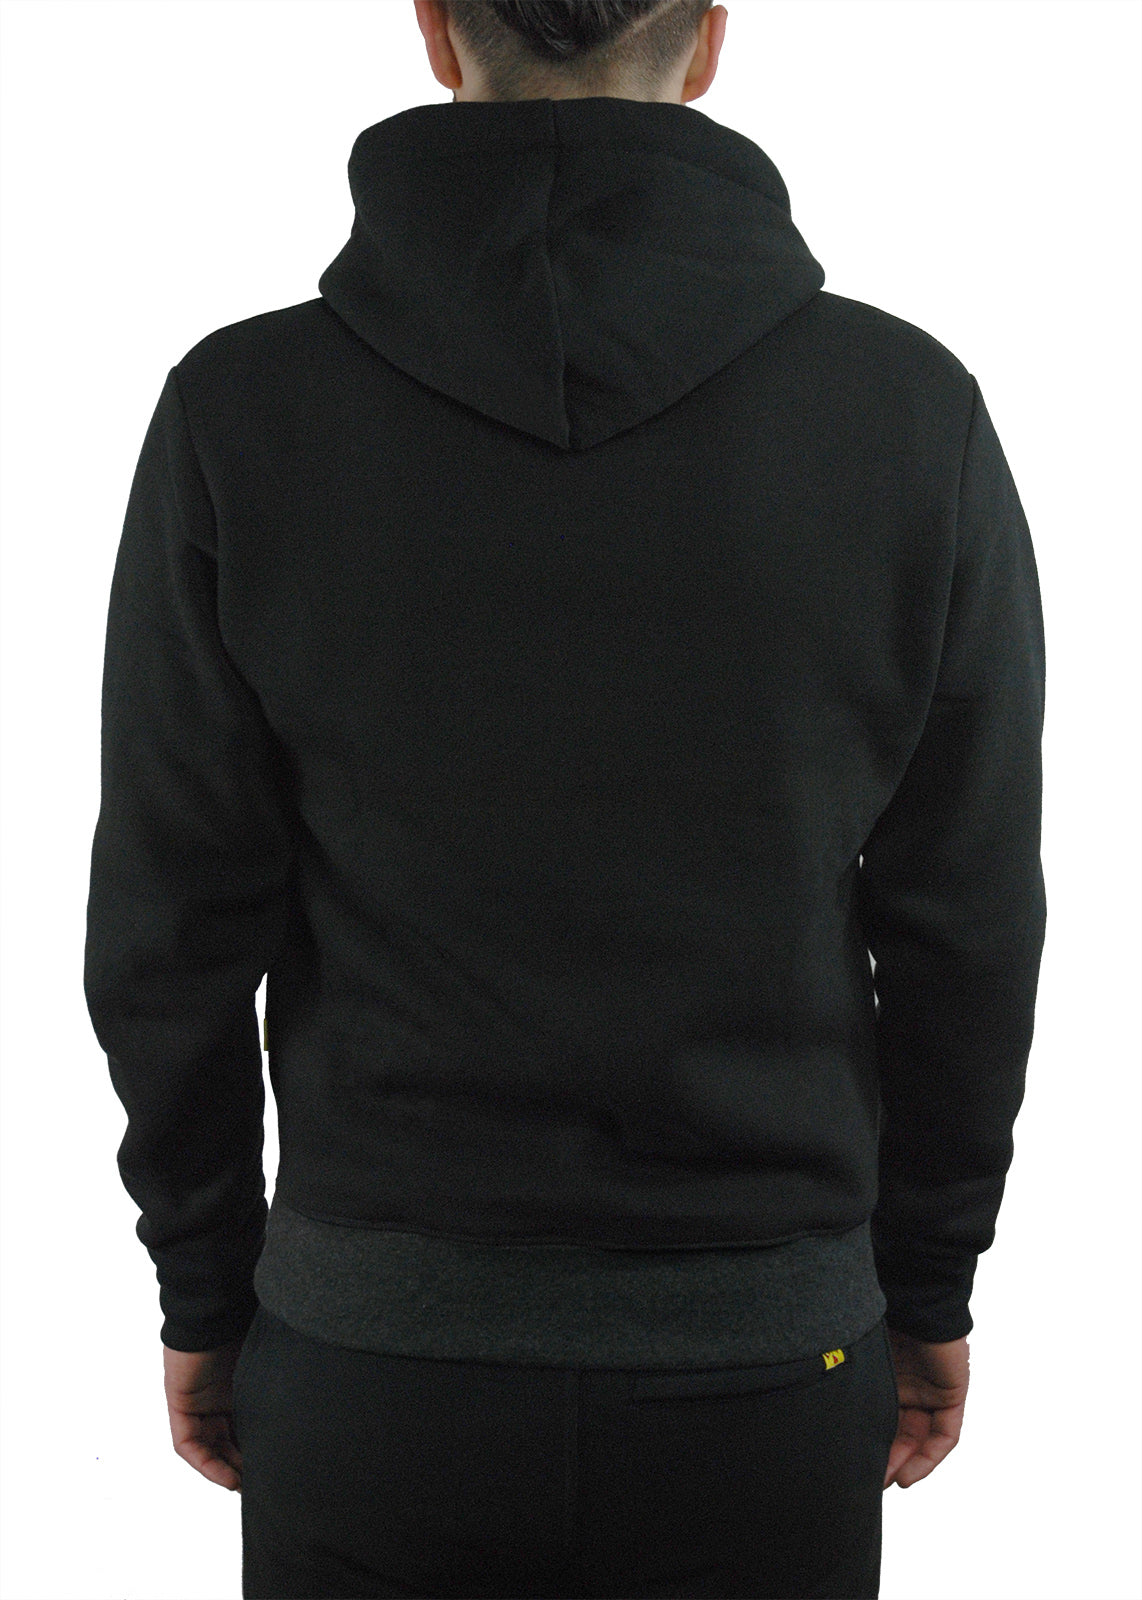 KRONK Premium Fleece Pullover Hoodie Regular fit Black/Charcoal